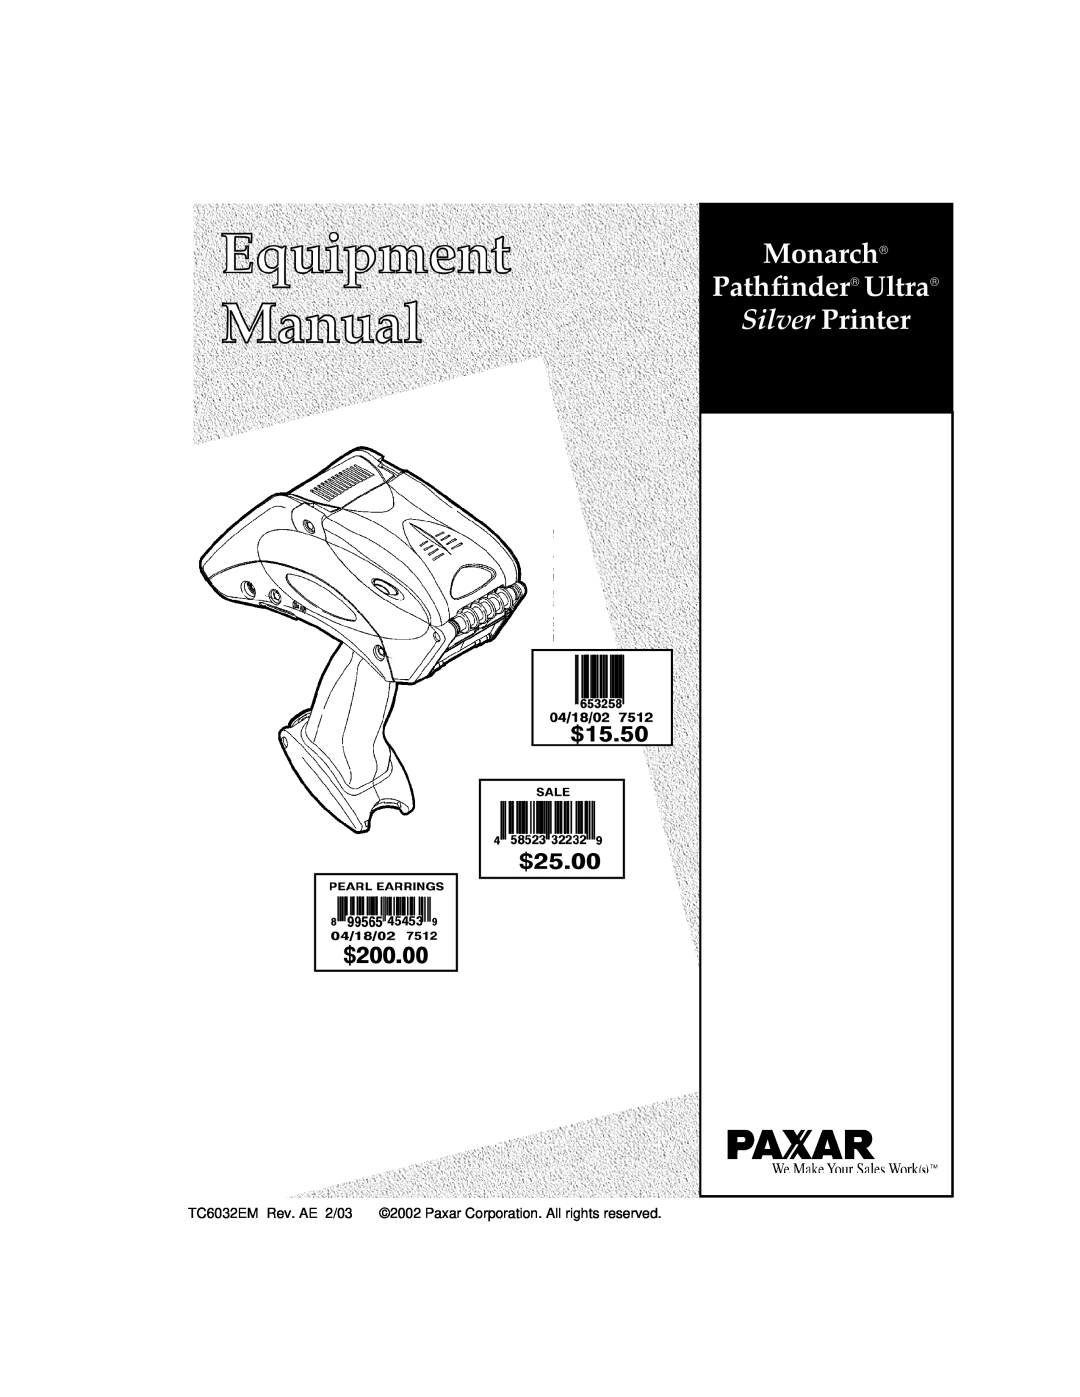 Paxar TC6032EM manual Monarchâ Pathfinderâ Ultraâ, Silver Printer 